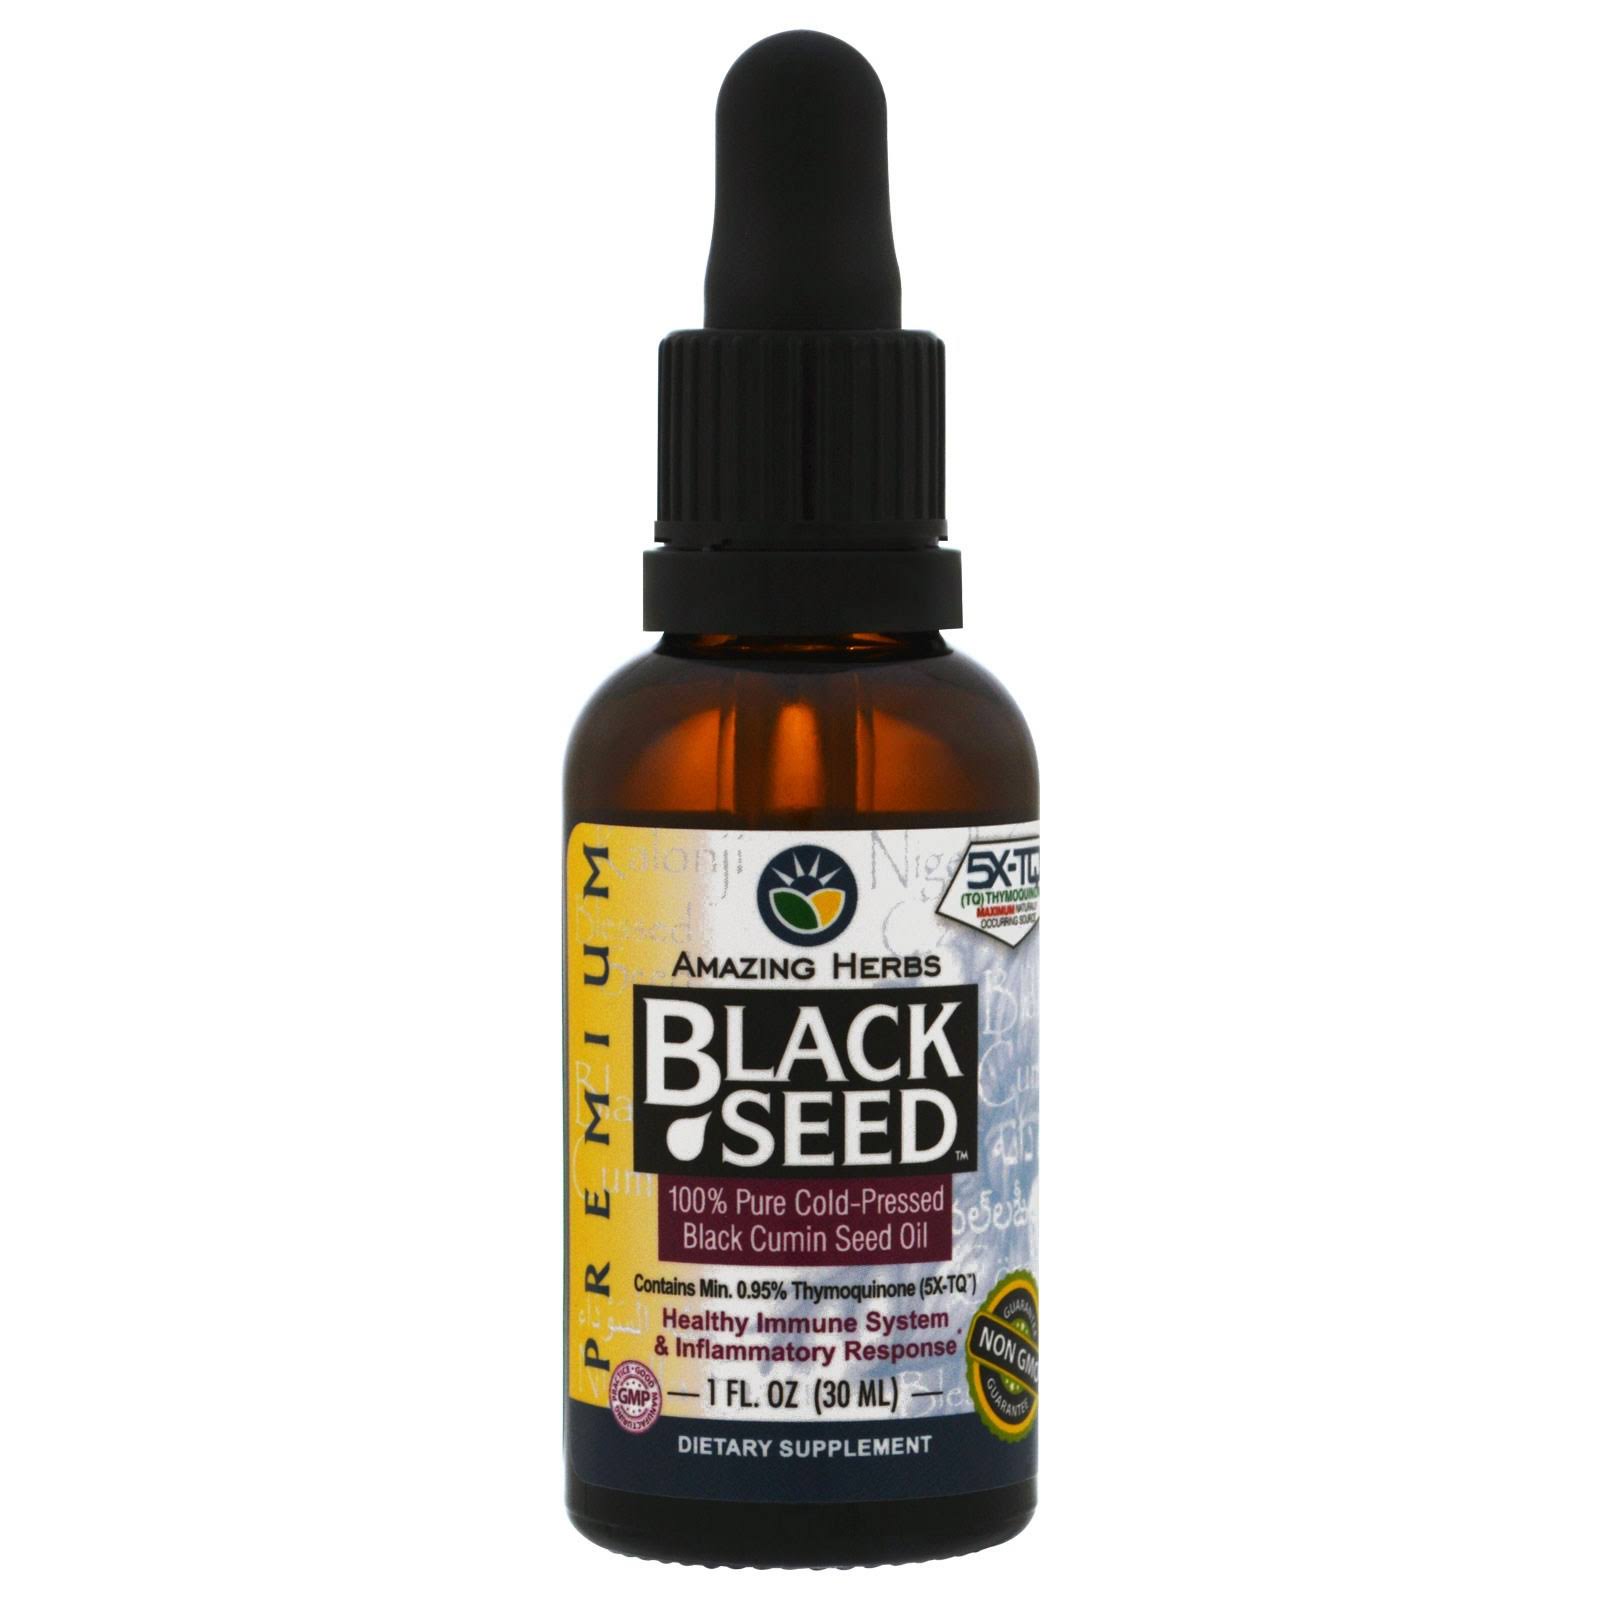 Amazing Herbs Black Seed Cold Pressed Oil - 30ml